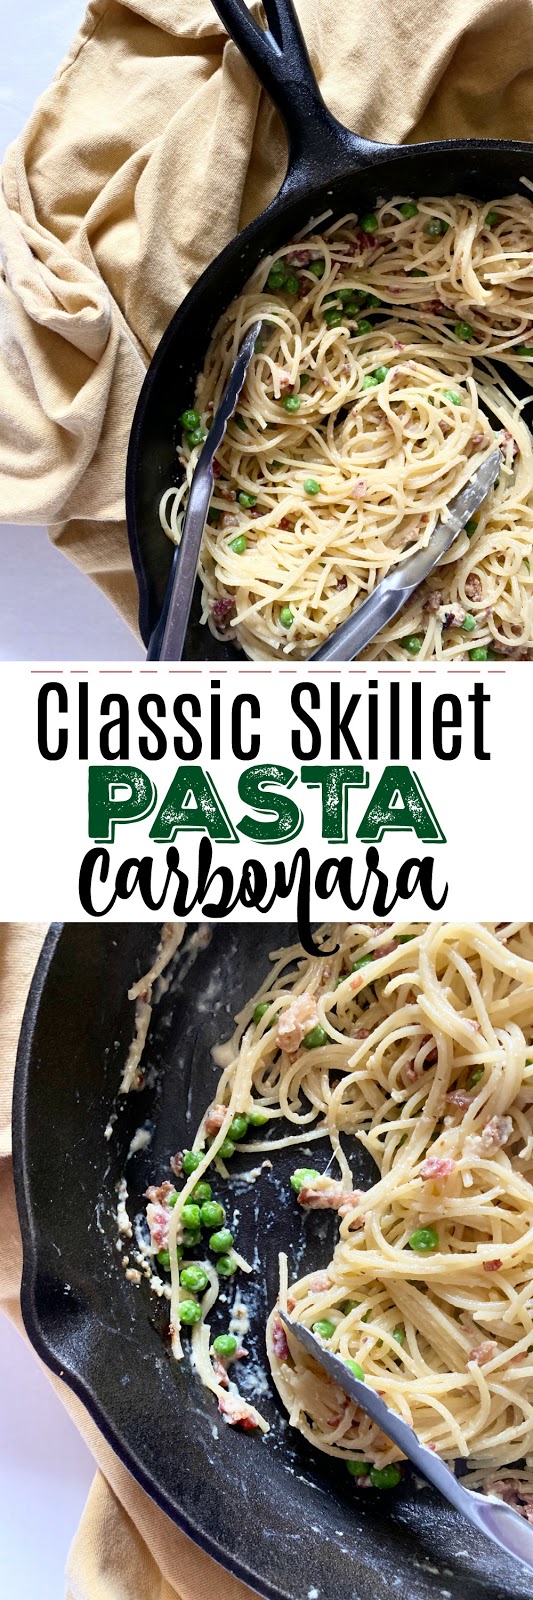 classic skillet pasta carbonara #sweetsavoryeats